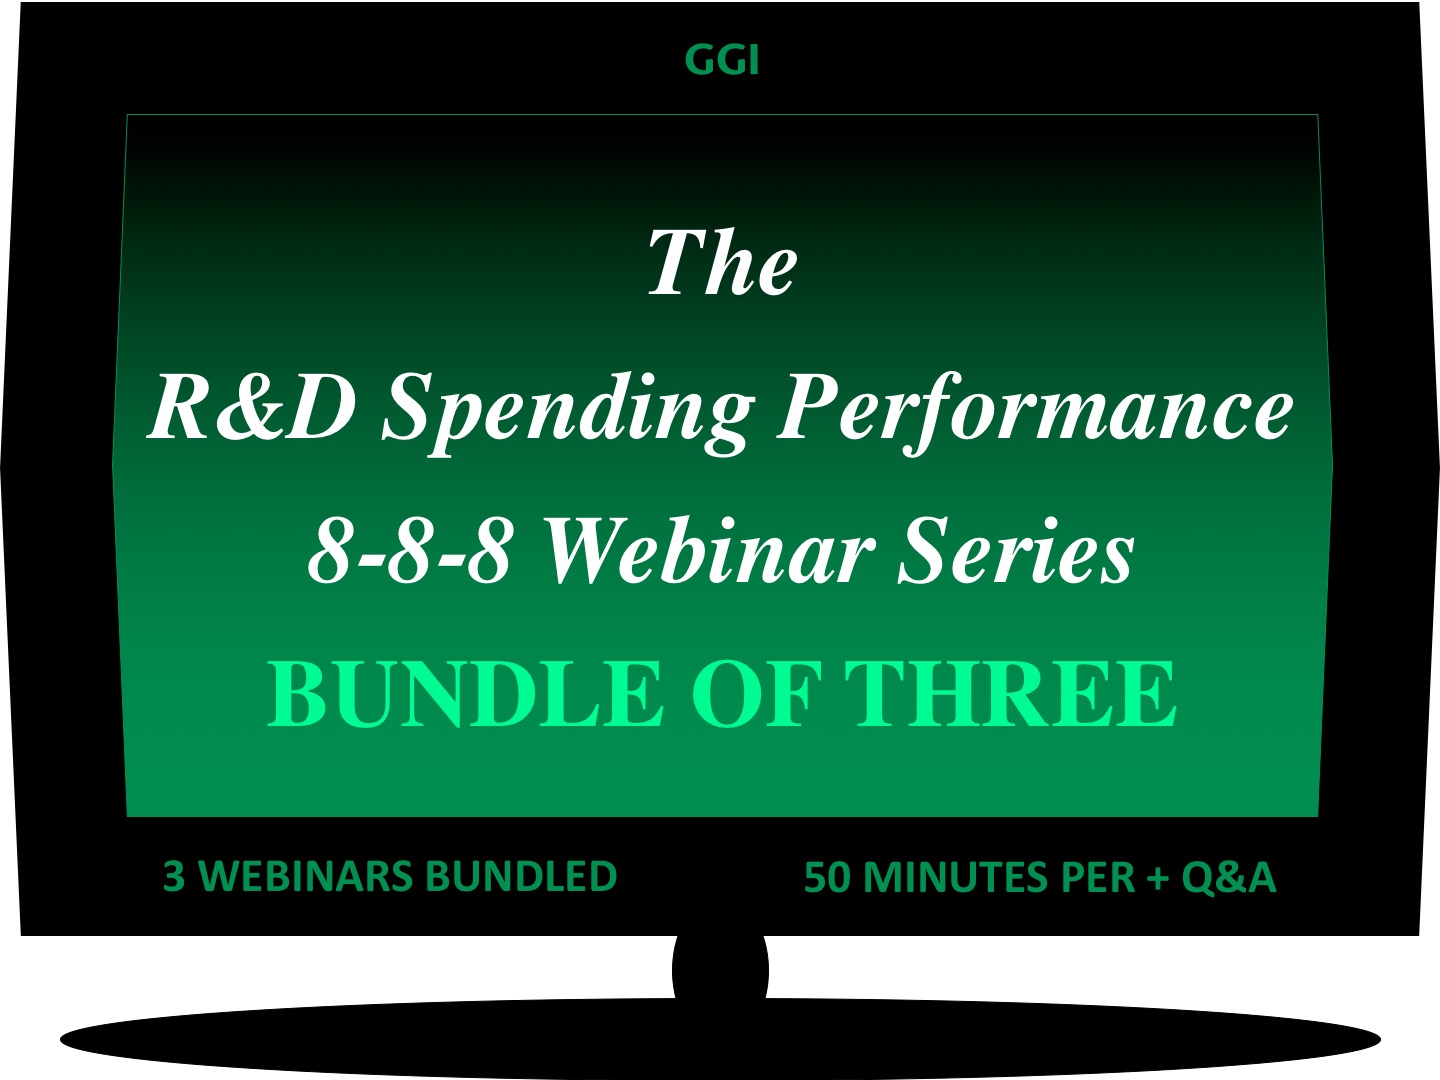 R&D Spending Perforance Webinar 8-8-8 Webinar Series